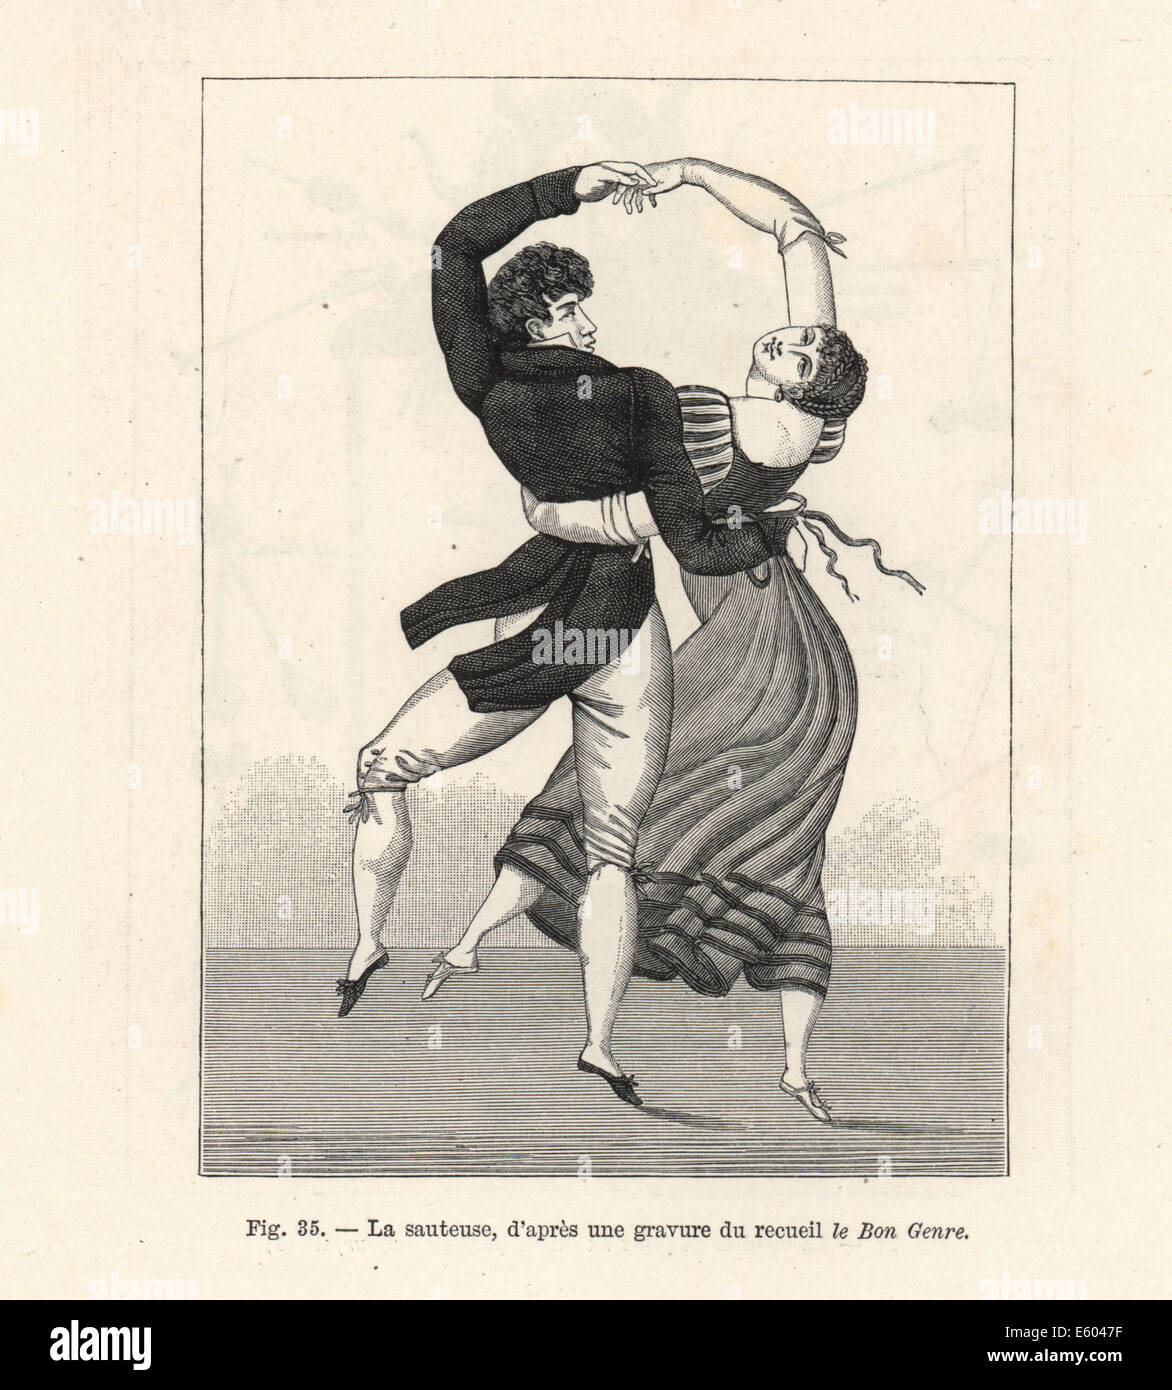 French couple dancing la Sauteuse, a pair dance popular circa 1800. Stock Photo